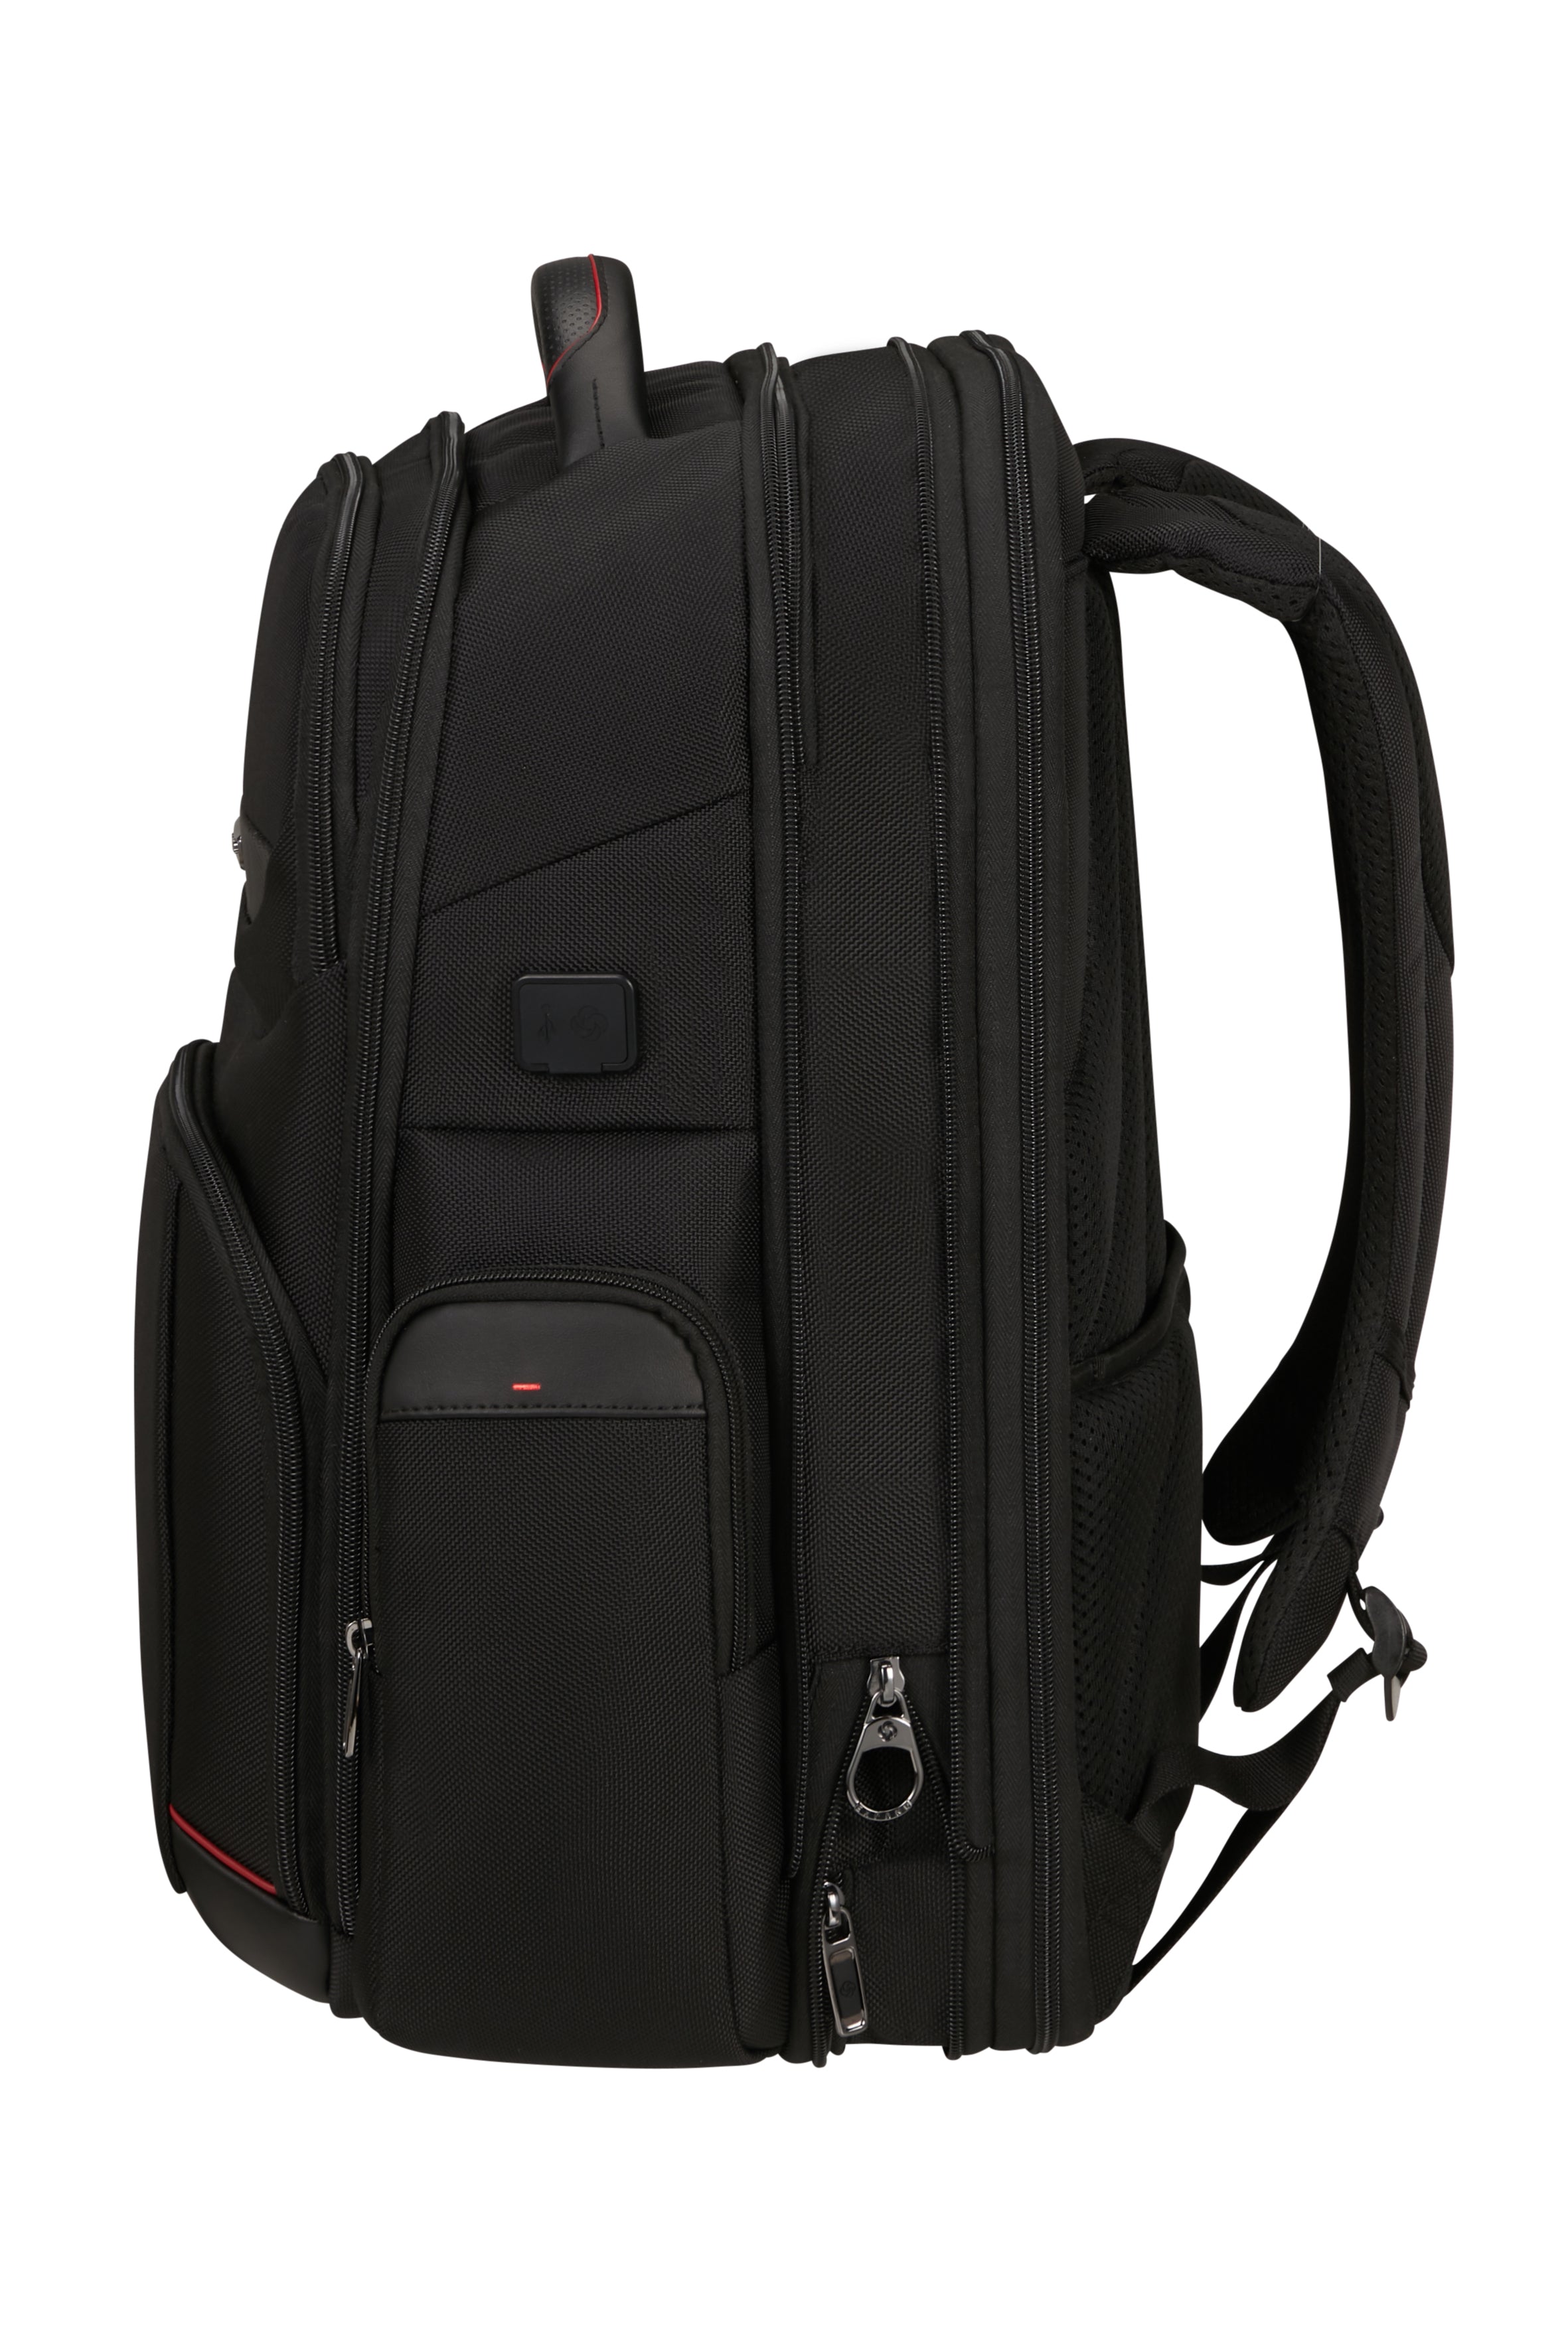 Samsonite PRO-DLX 6 - 17.6 EXP Backpack